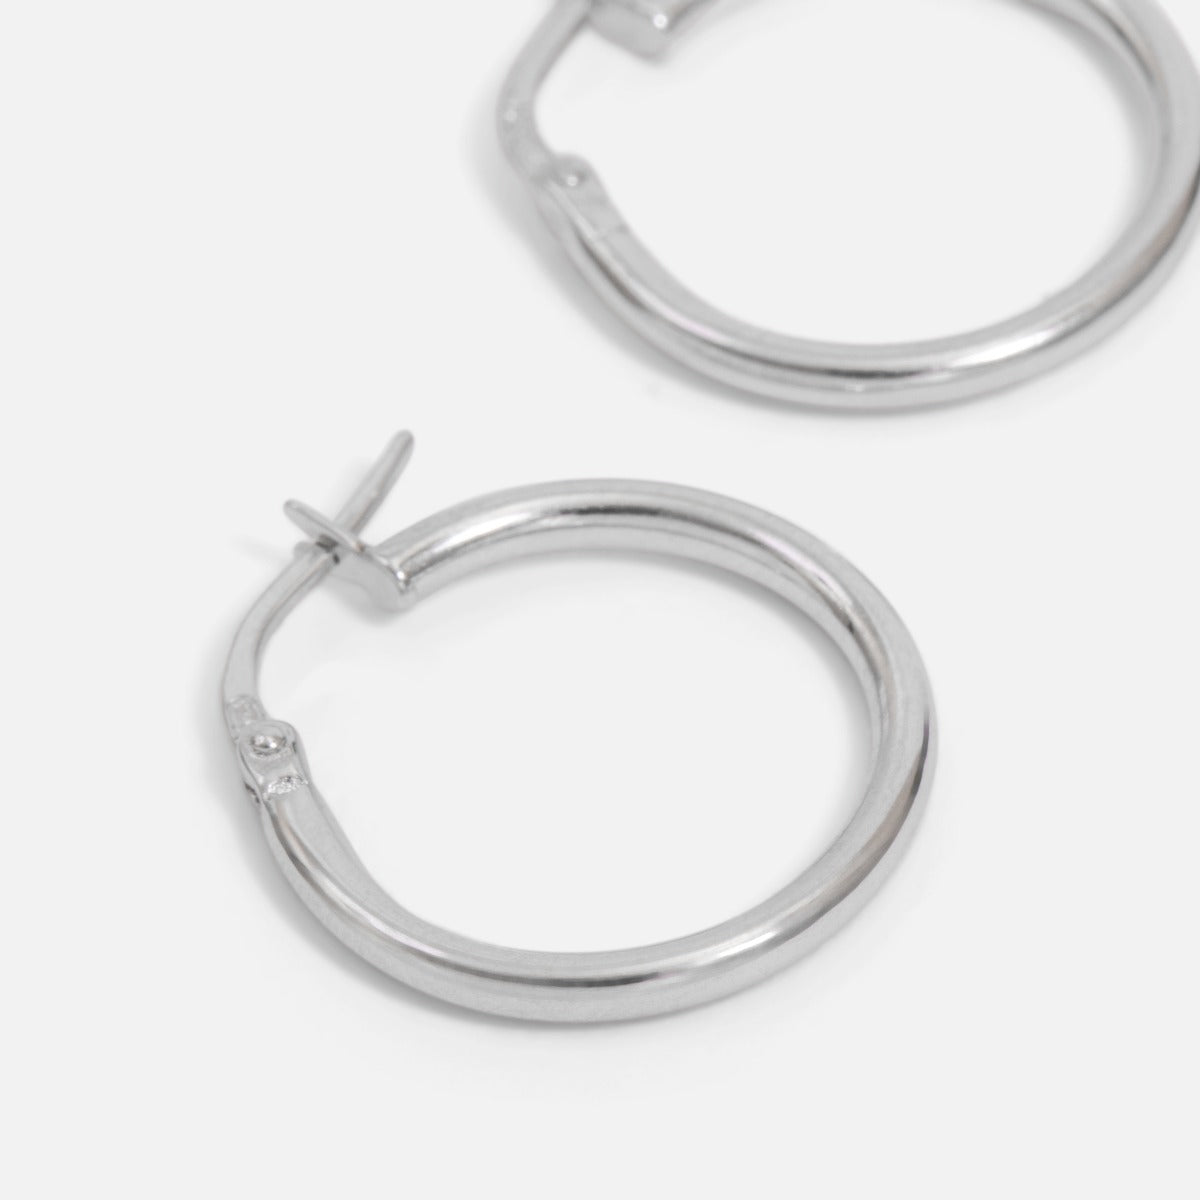 Sterling silver hoops earrings